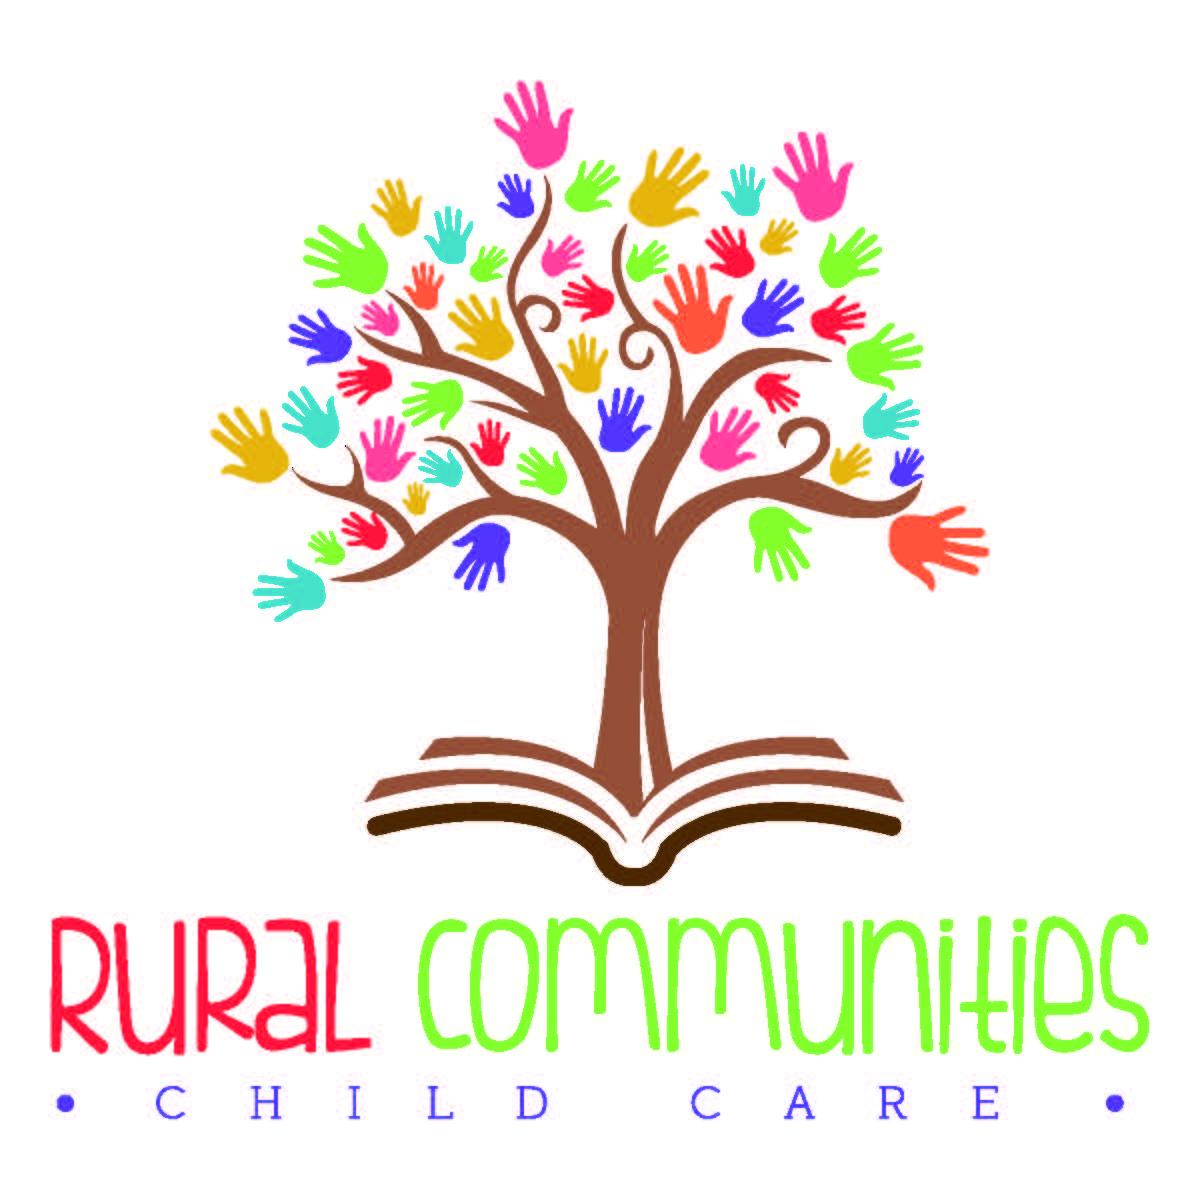 Rccc Logo - Rural Communities Child Care - Programs - NCO Inc. 2019 | Ukiah ...